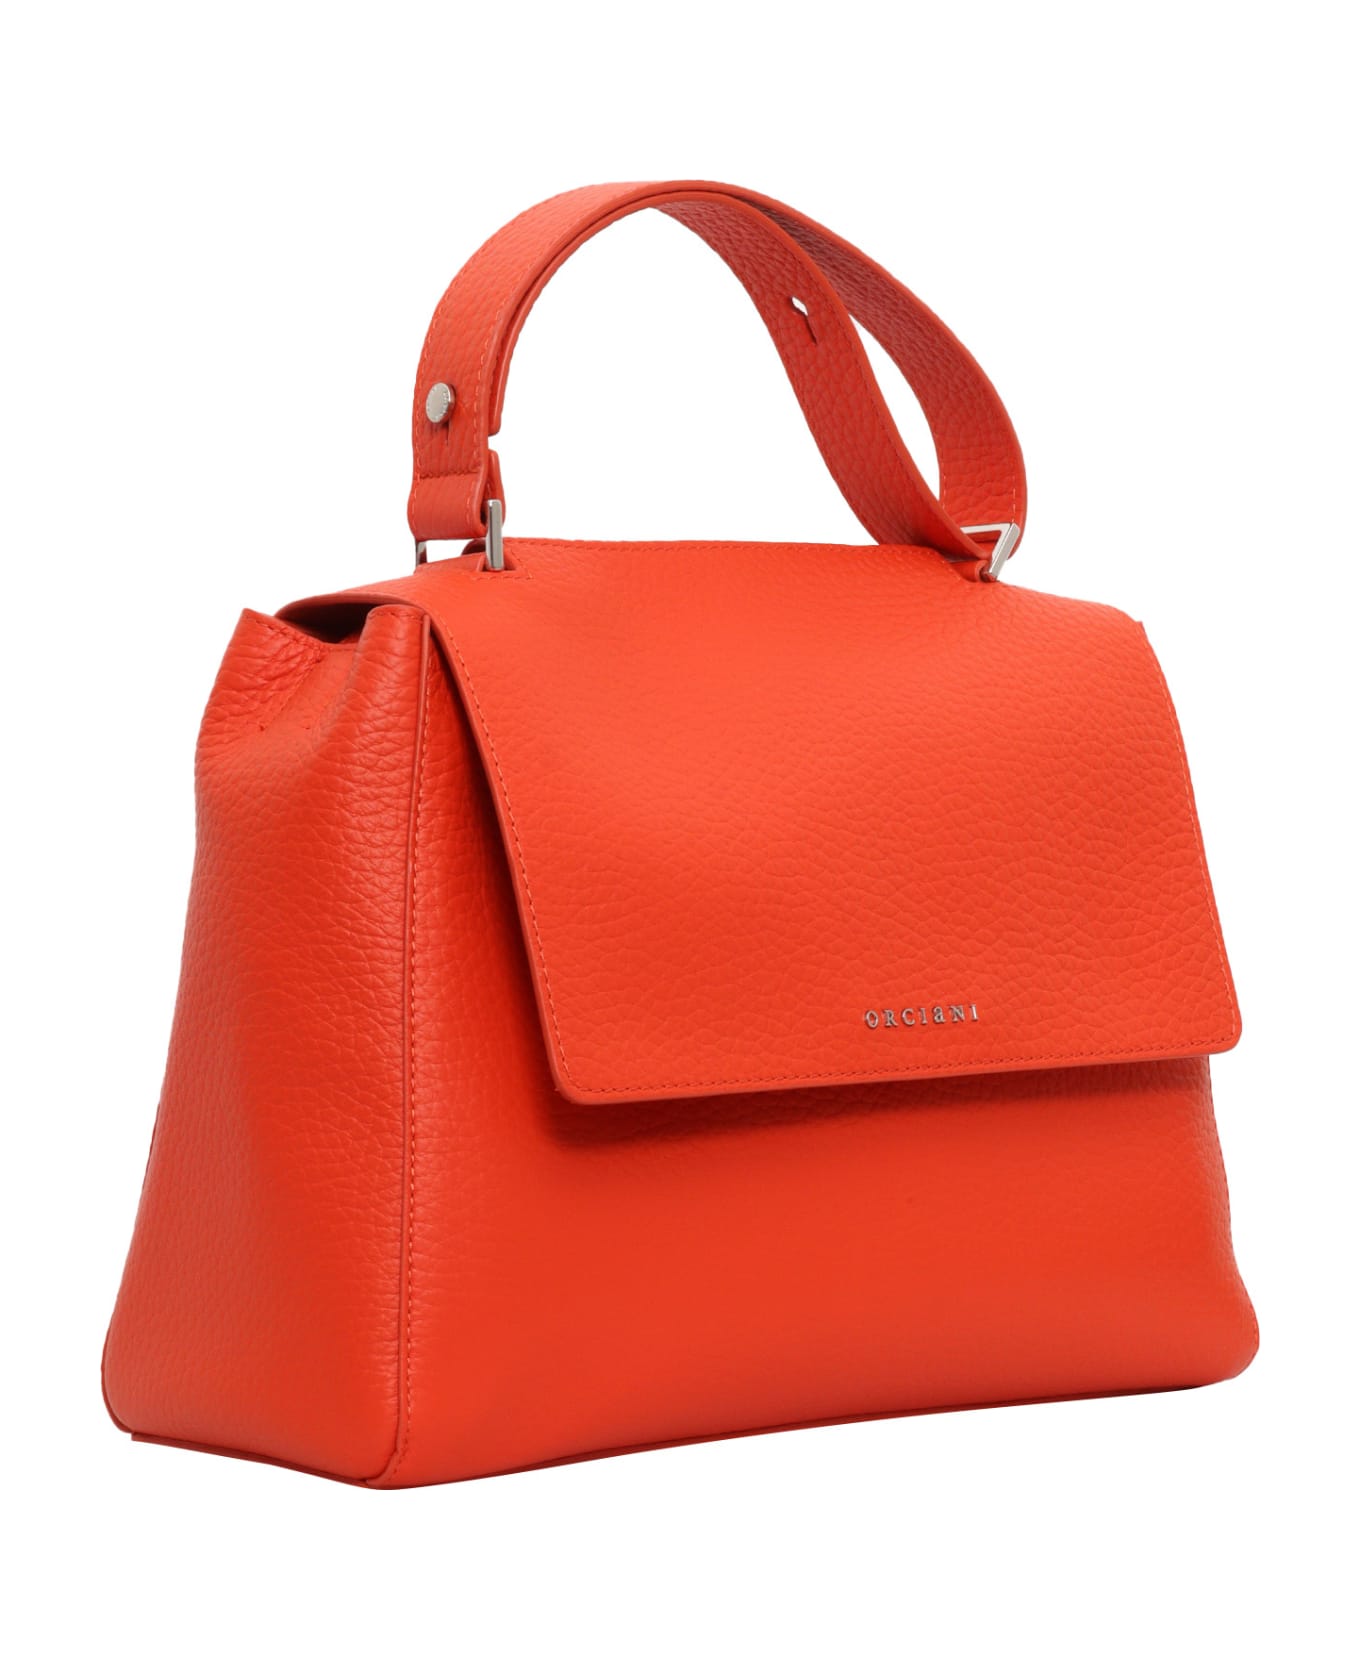 Orciani Orange Handbag - ORANGE